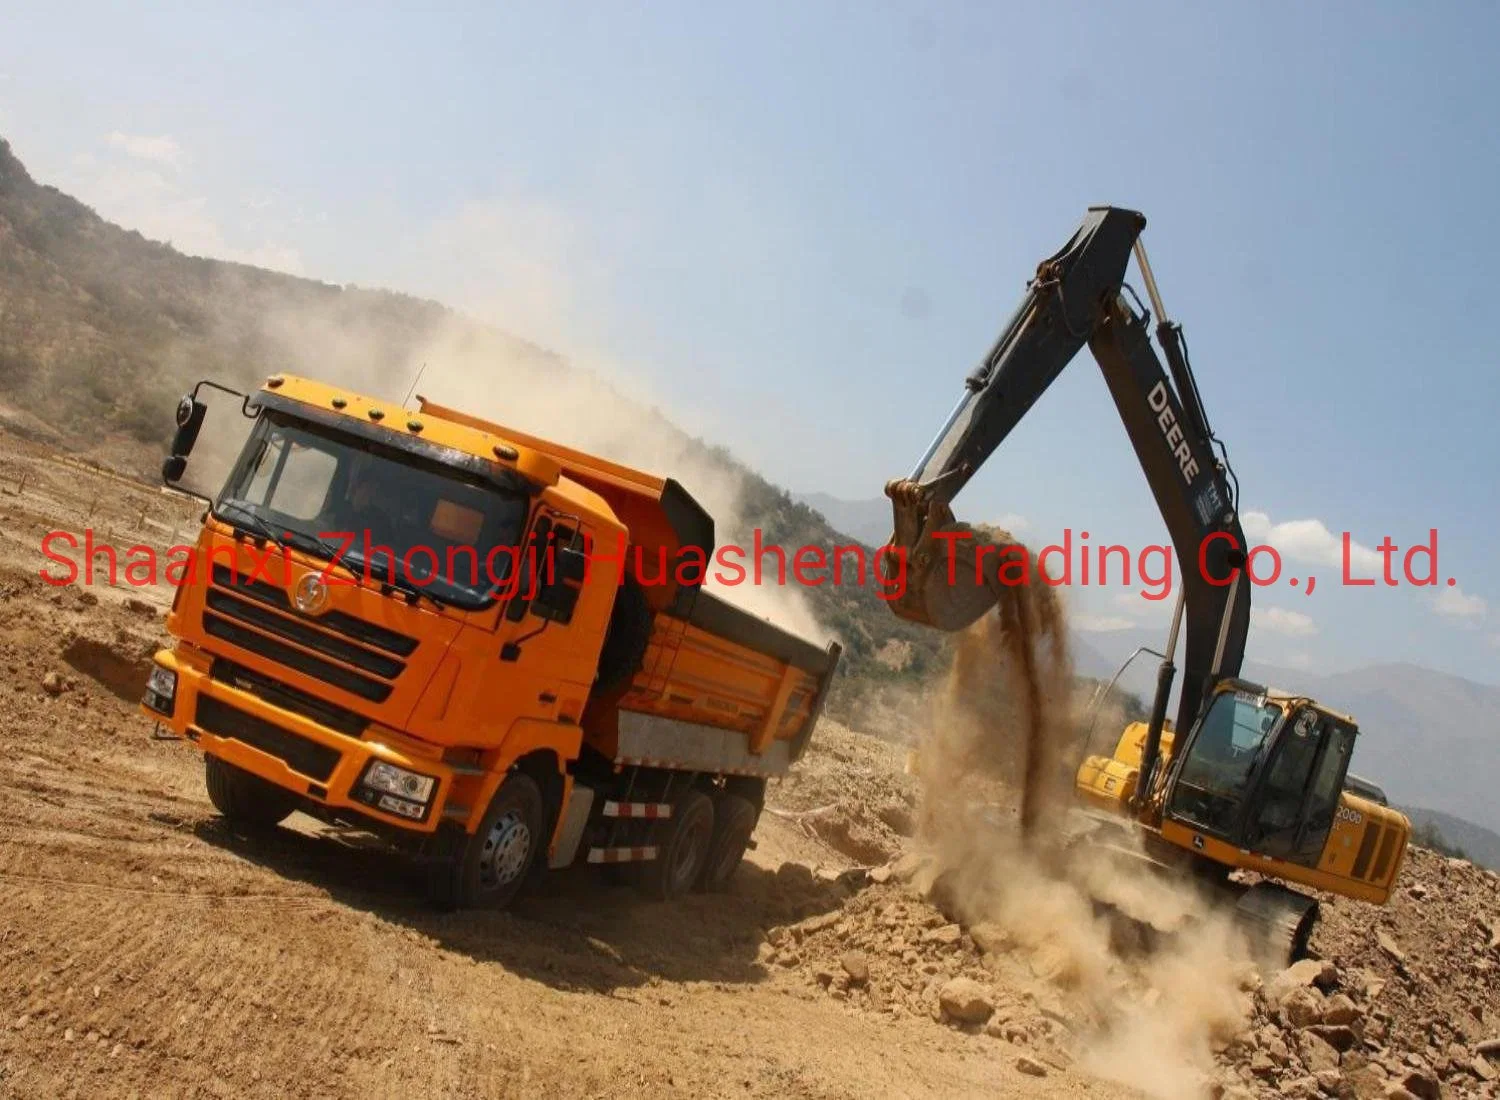 Os Caminhões de despejo Truck 30 ton, 40 Ton Shacman H3000 340hp Transporte de Pedra